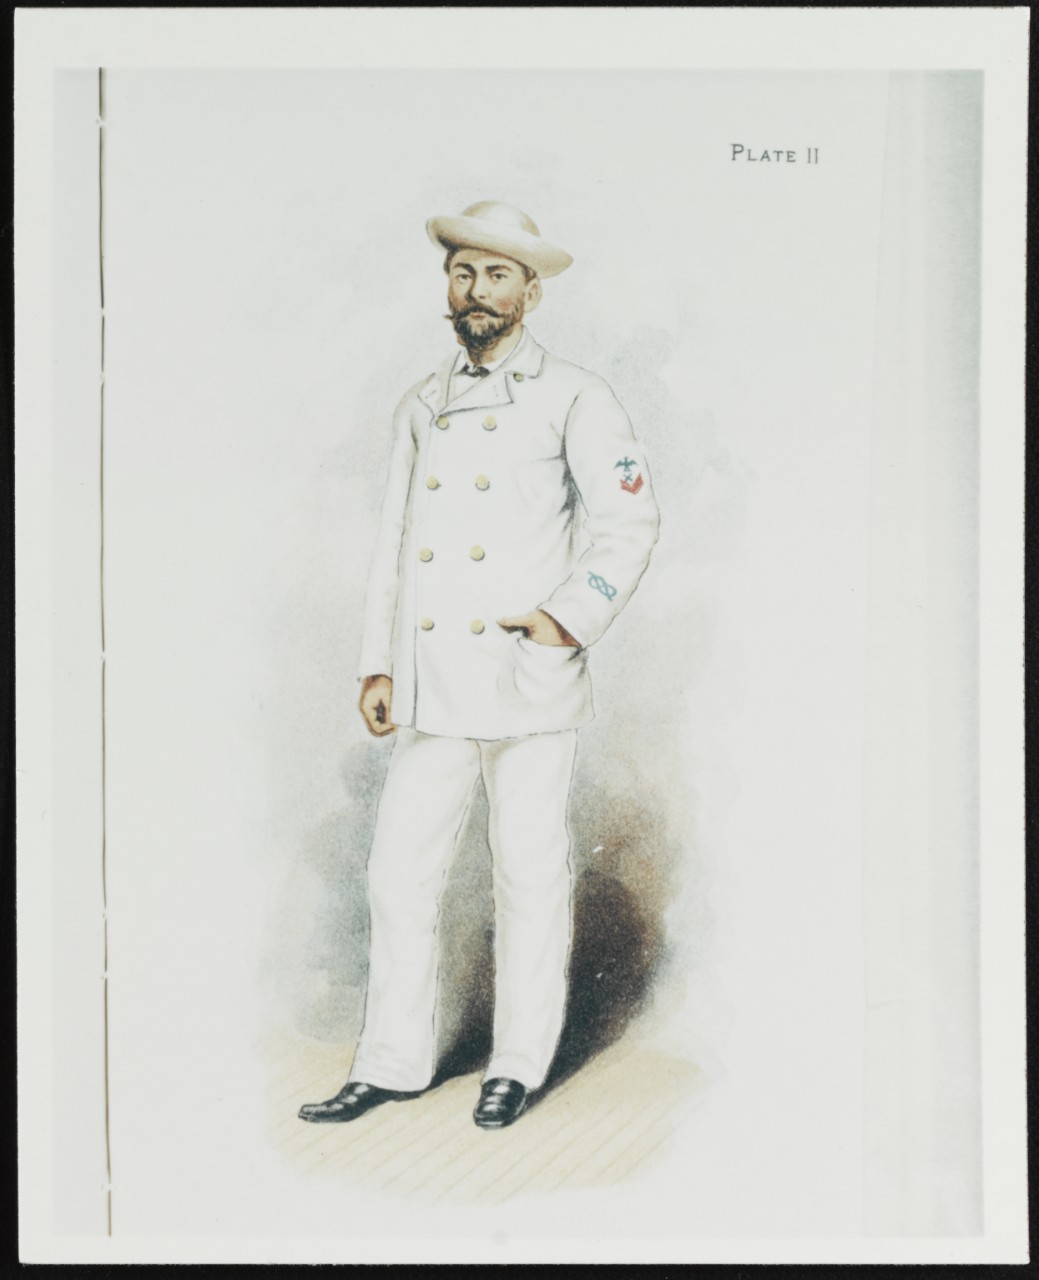 Enlisted Dress White Uniform. U.S. Naval Uniform Regulations 1886